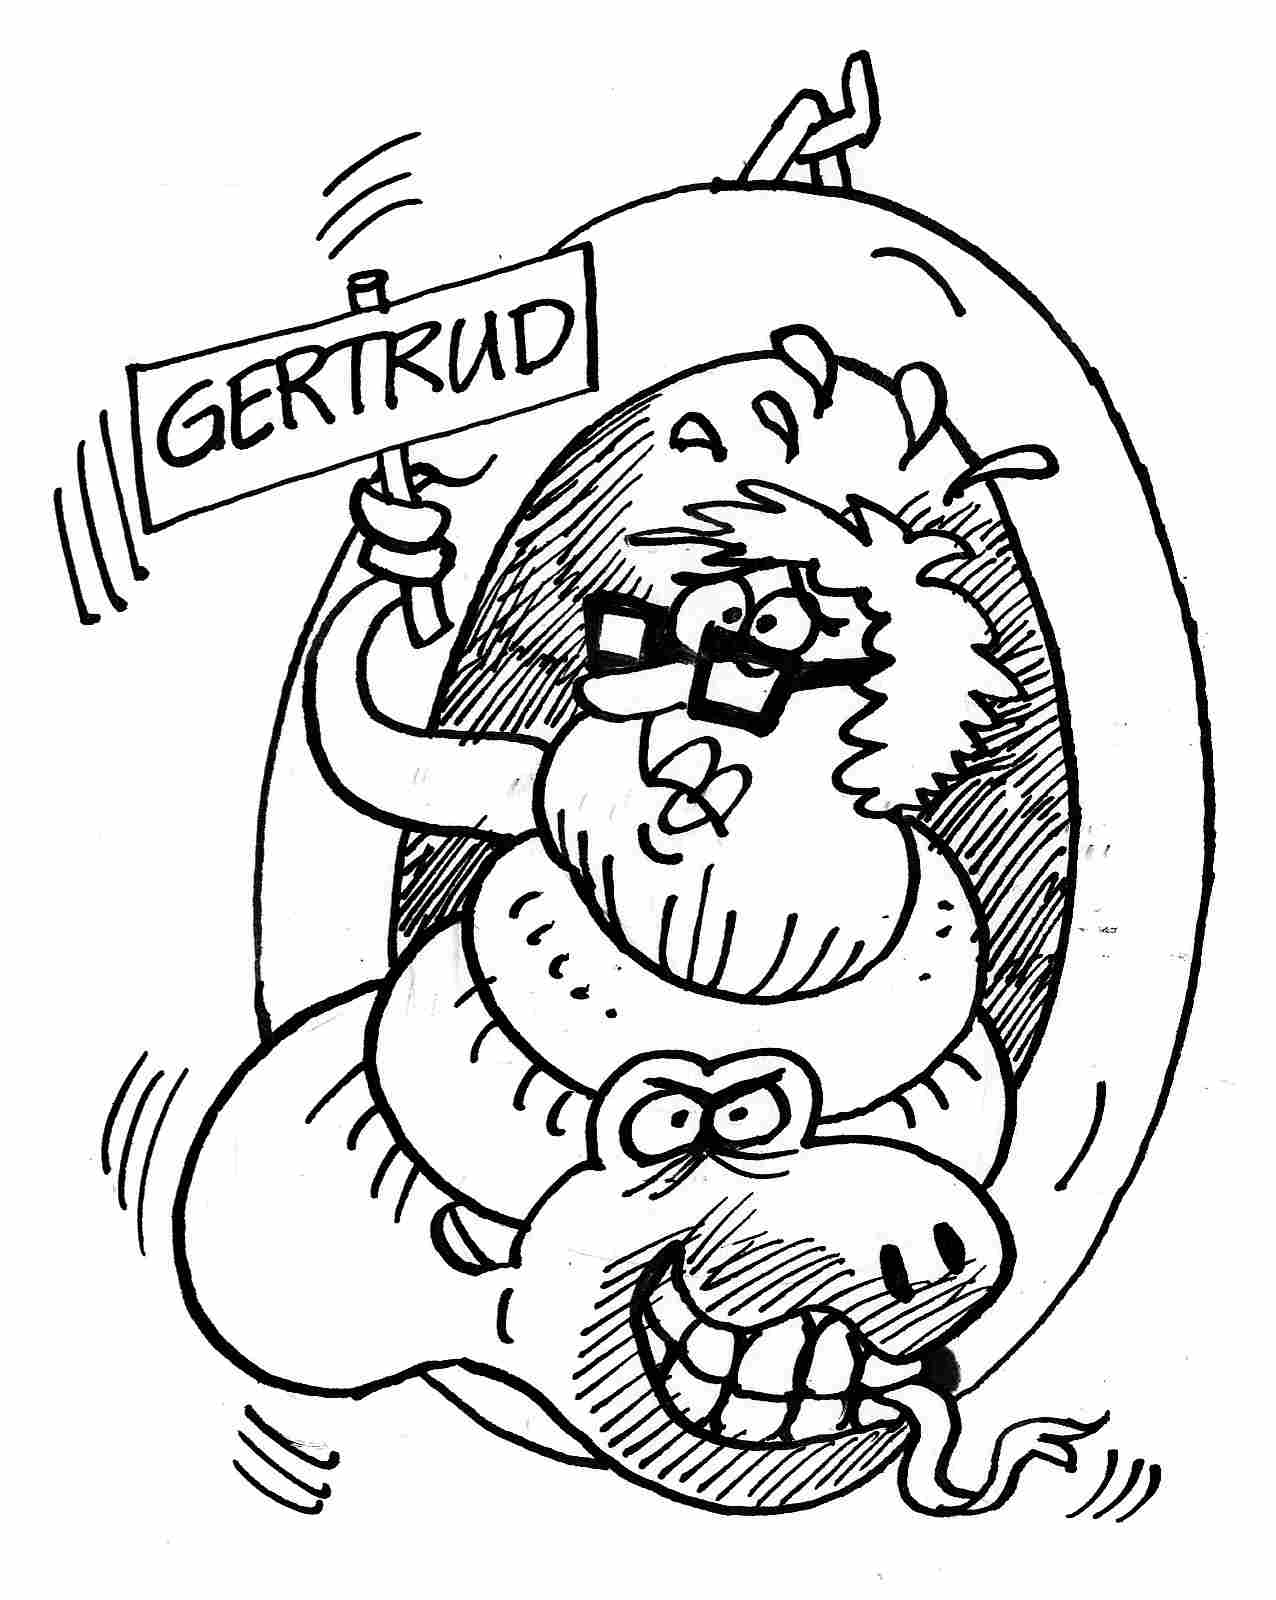 Web_Cartoon_Gertrud